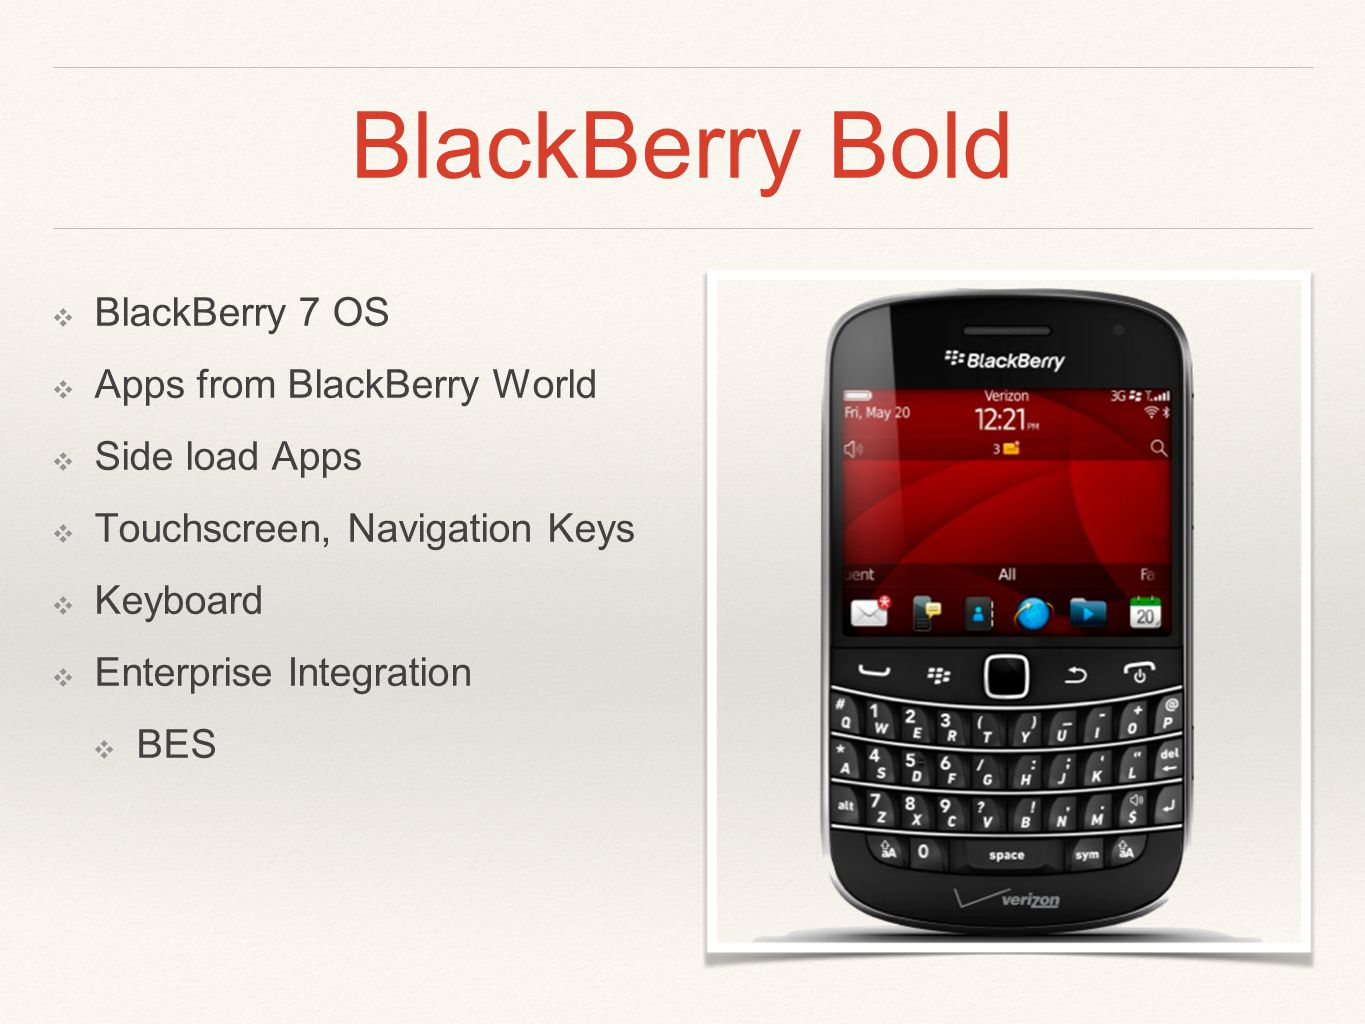 BlackBerry Bold ❖ BlackBerry 7 OS ❖ Apps from BlackBerry World ❖ Side load Apps ❖ Touchscreen, Navigation Keys ❖ Keyboard ❖ Enterprise Integration ❖ BES